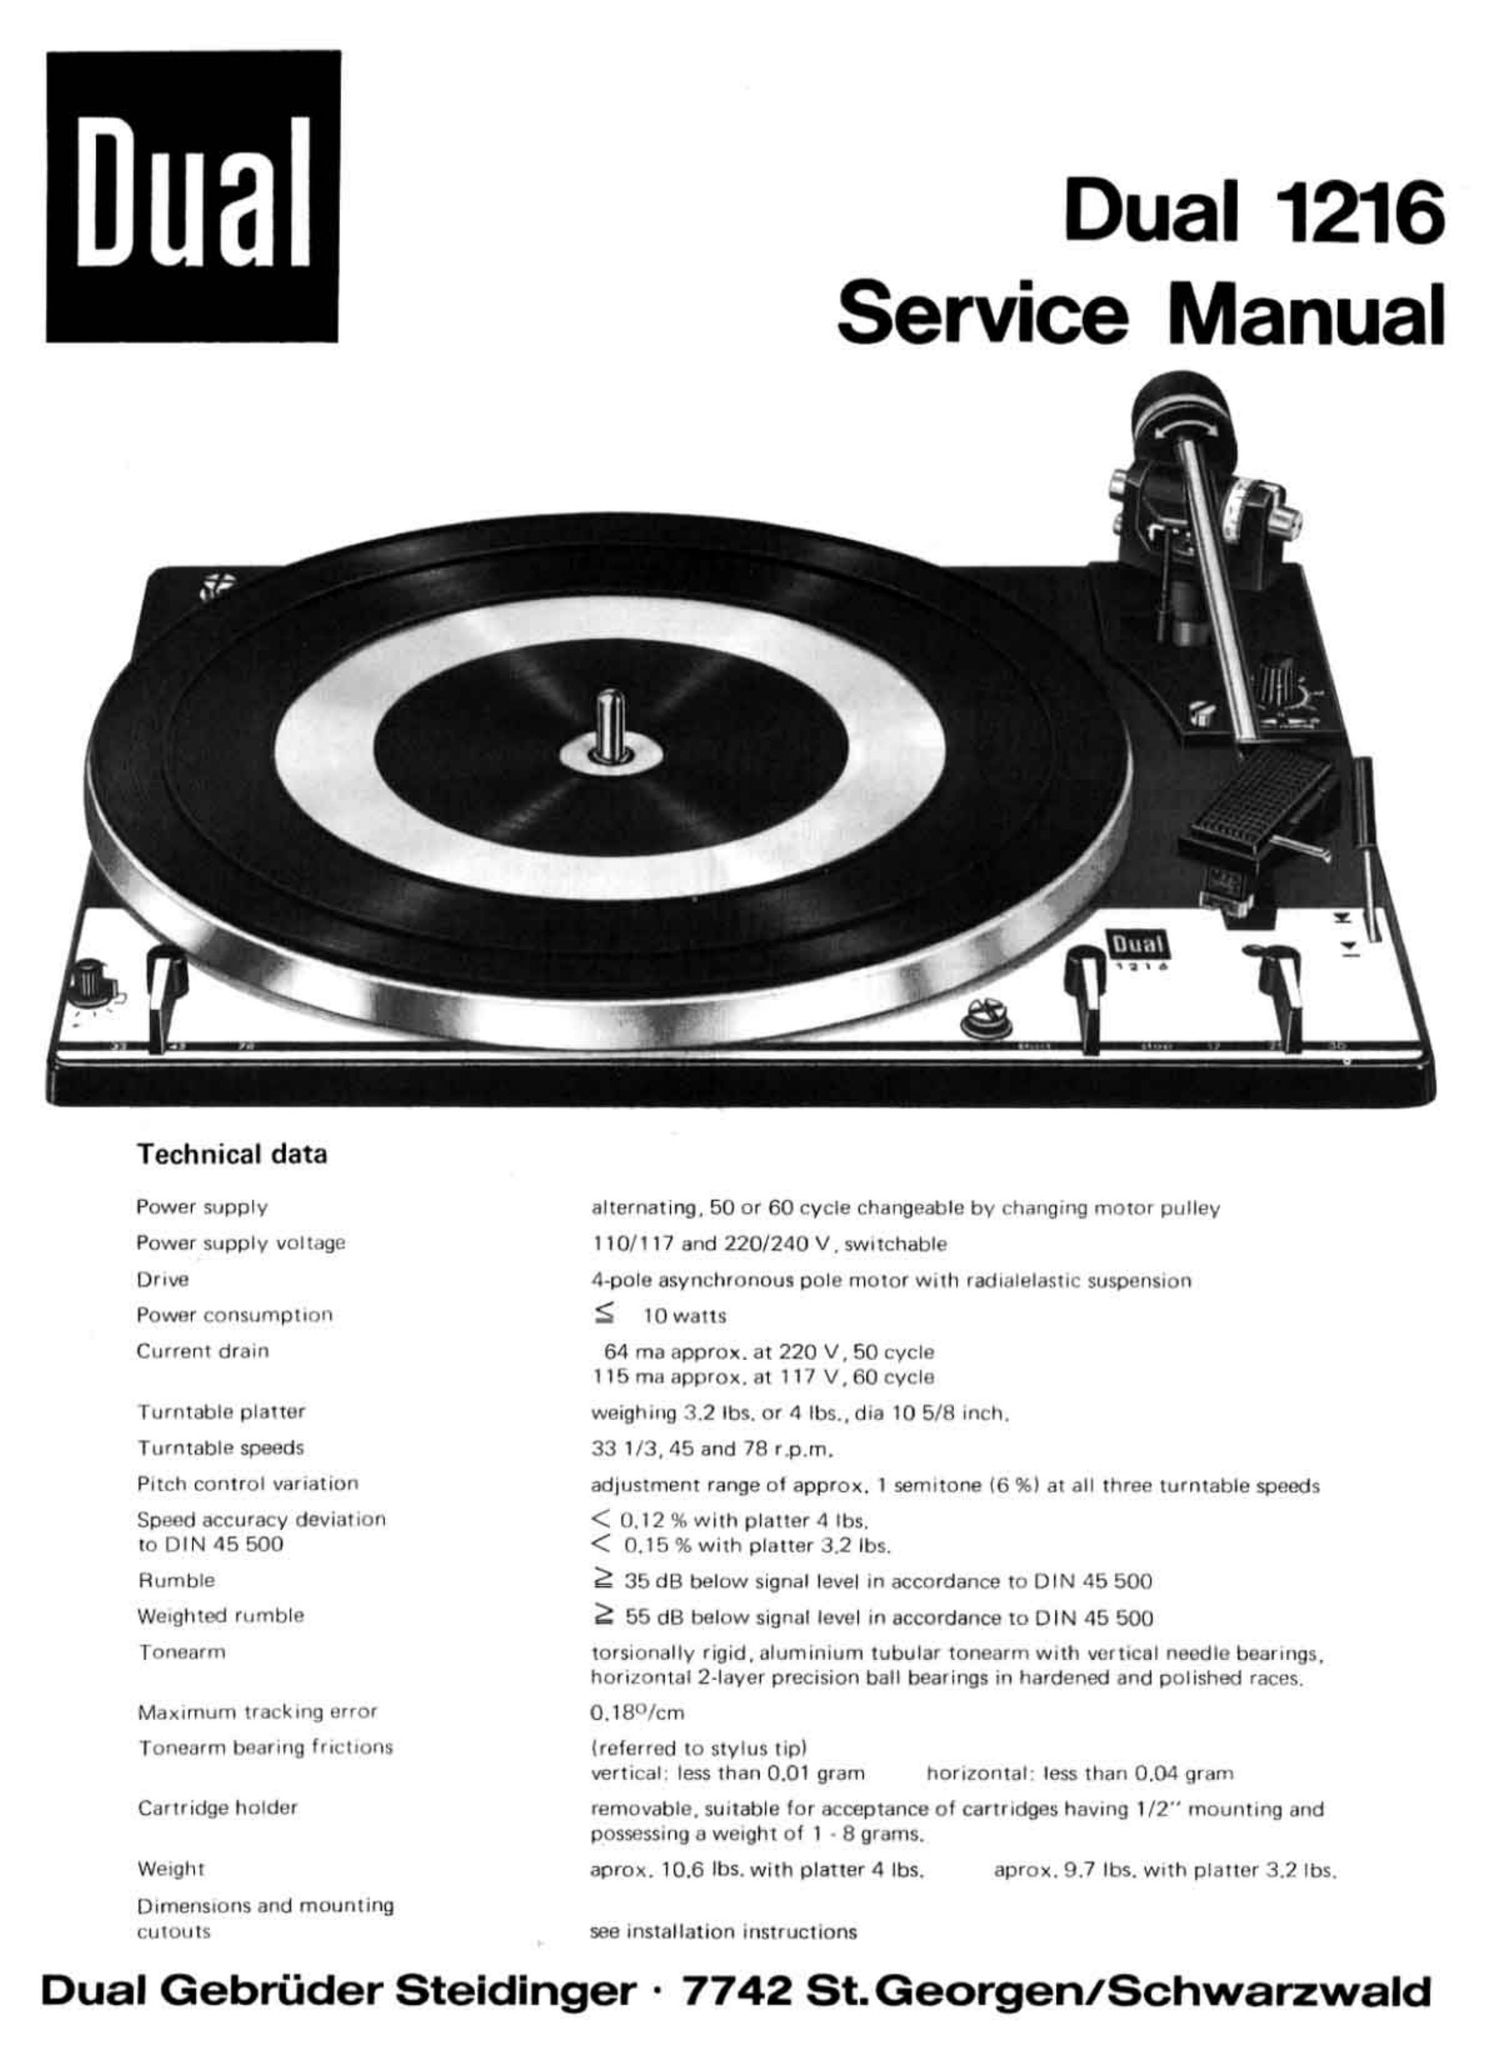 Dual 1216 Service Manual